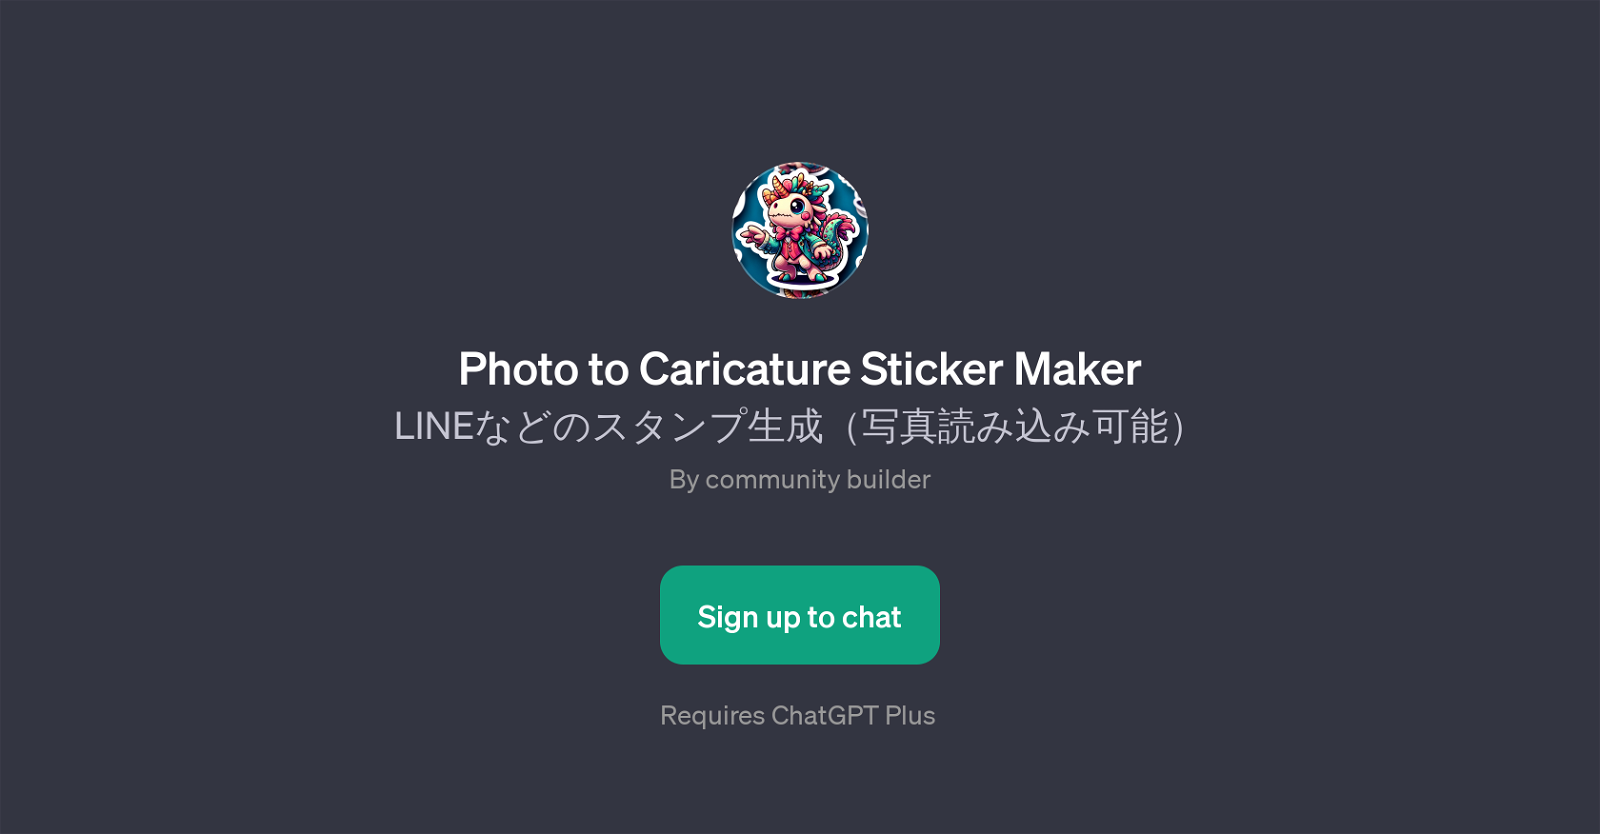 Photo to Caricature Sticker Maker website